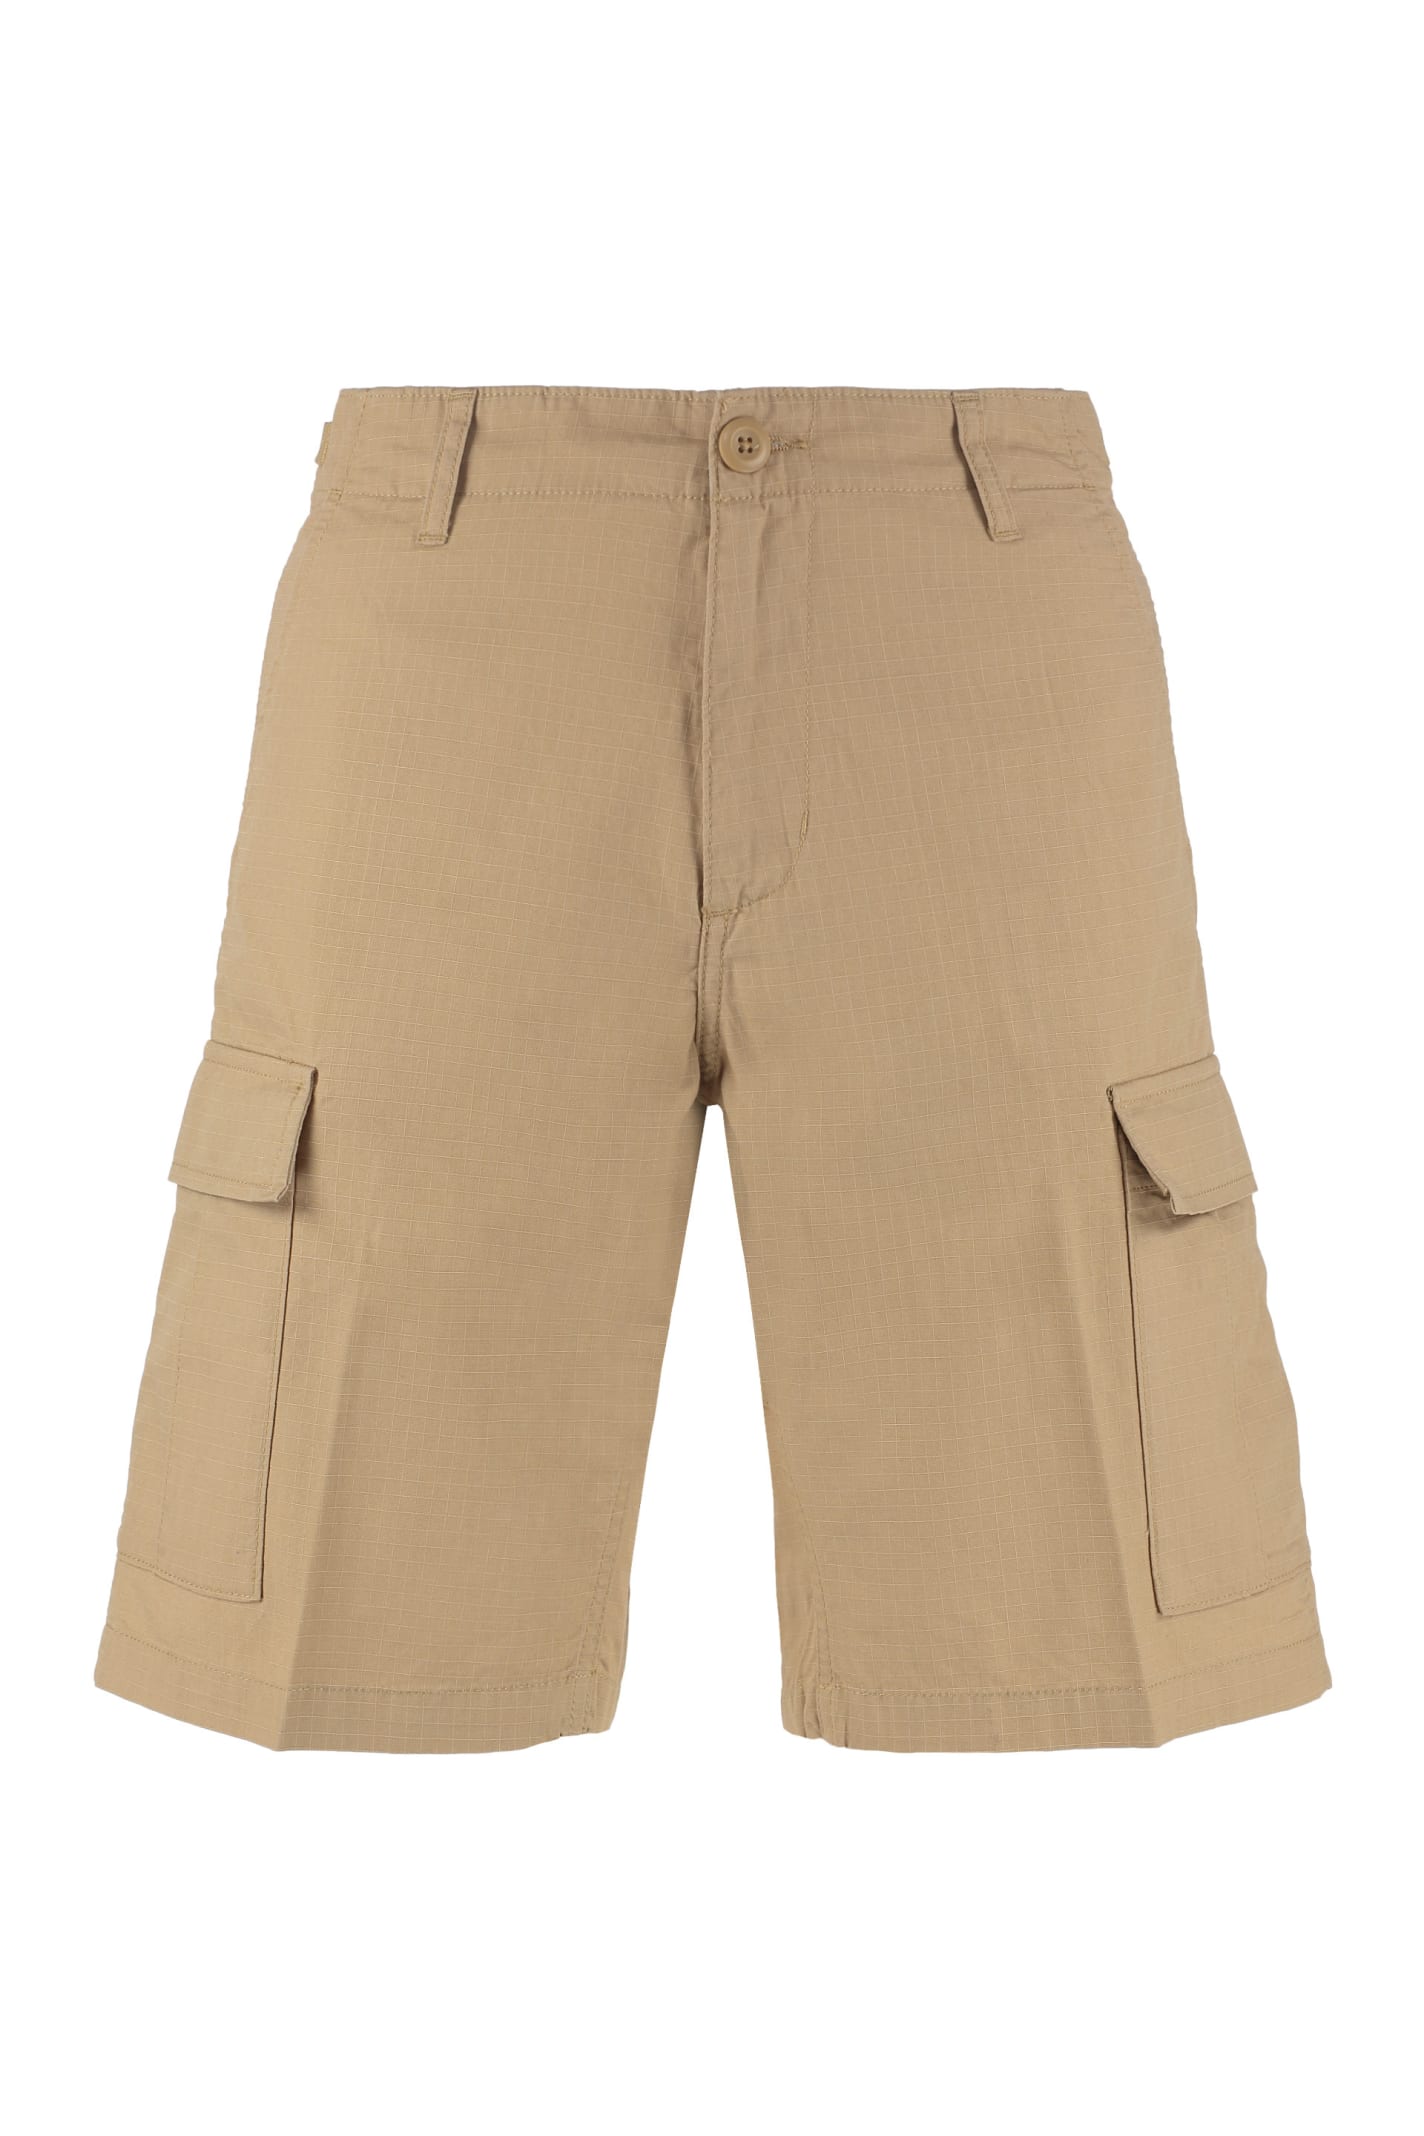 Carhartt Aviation Cotton Bermuda Shorts